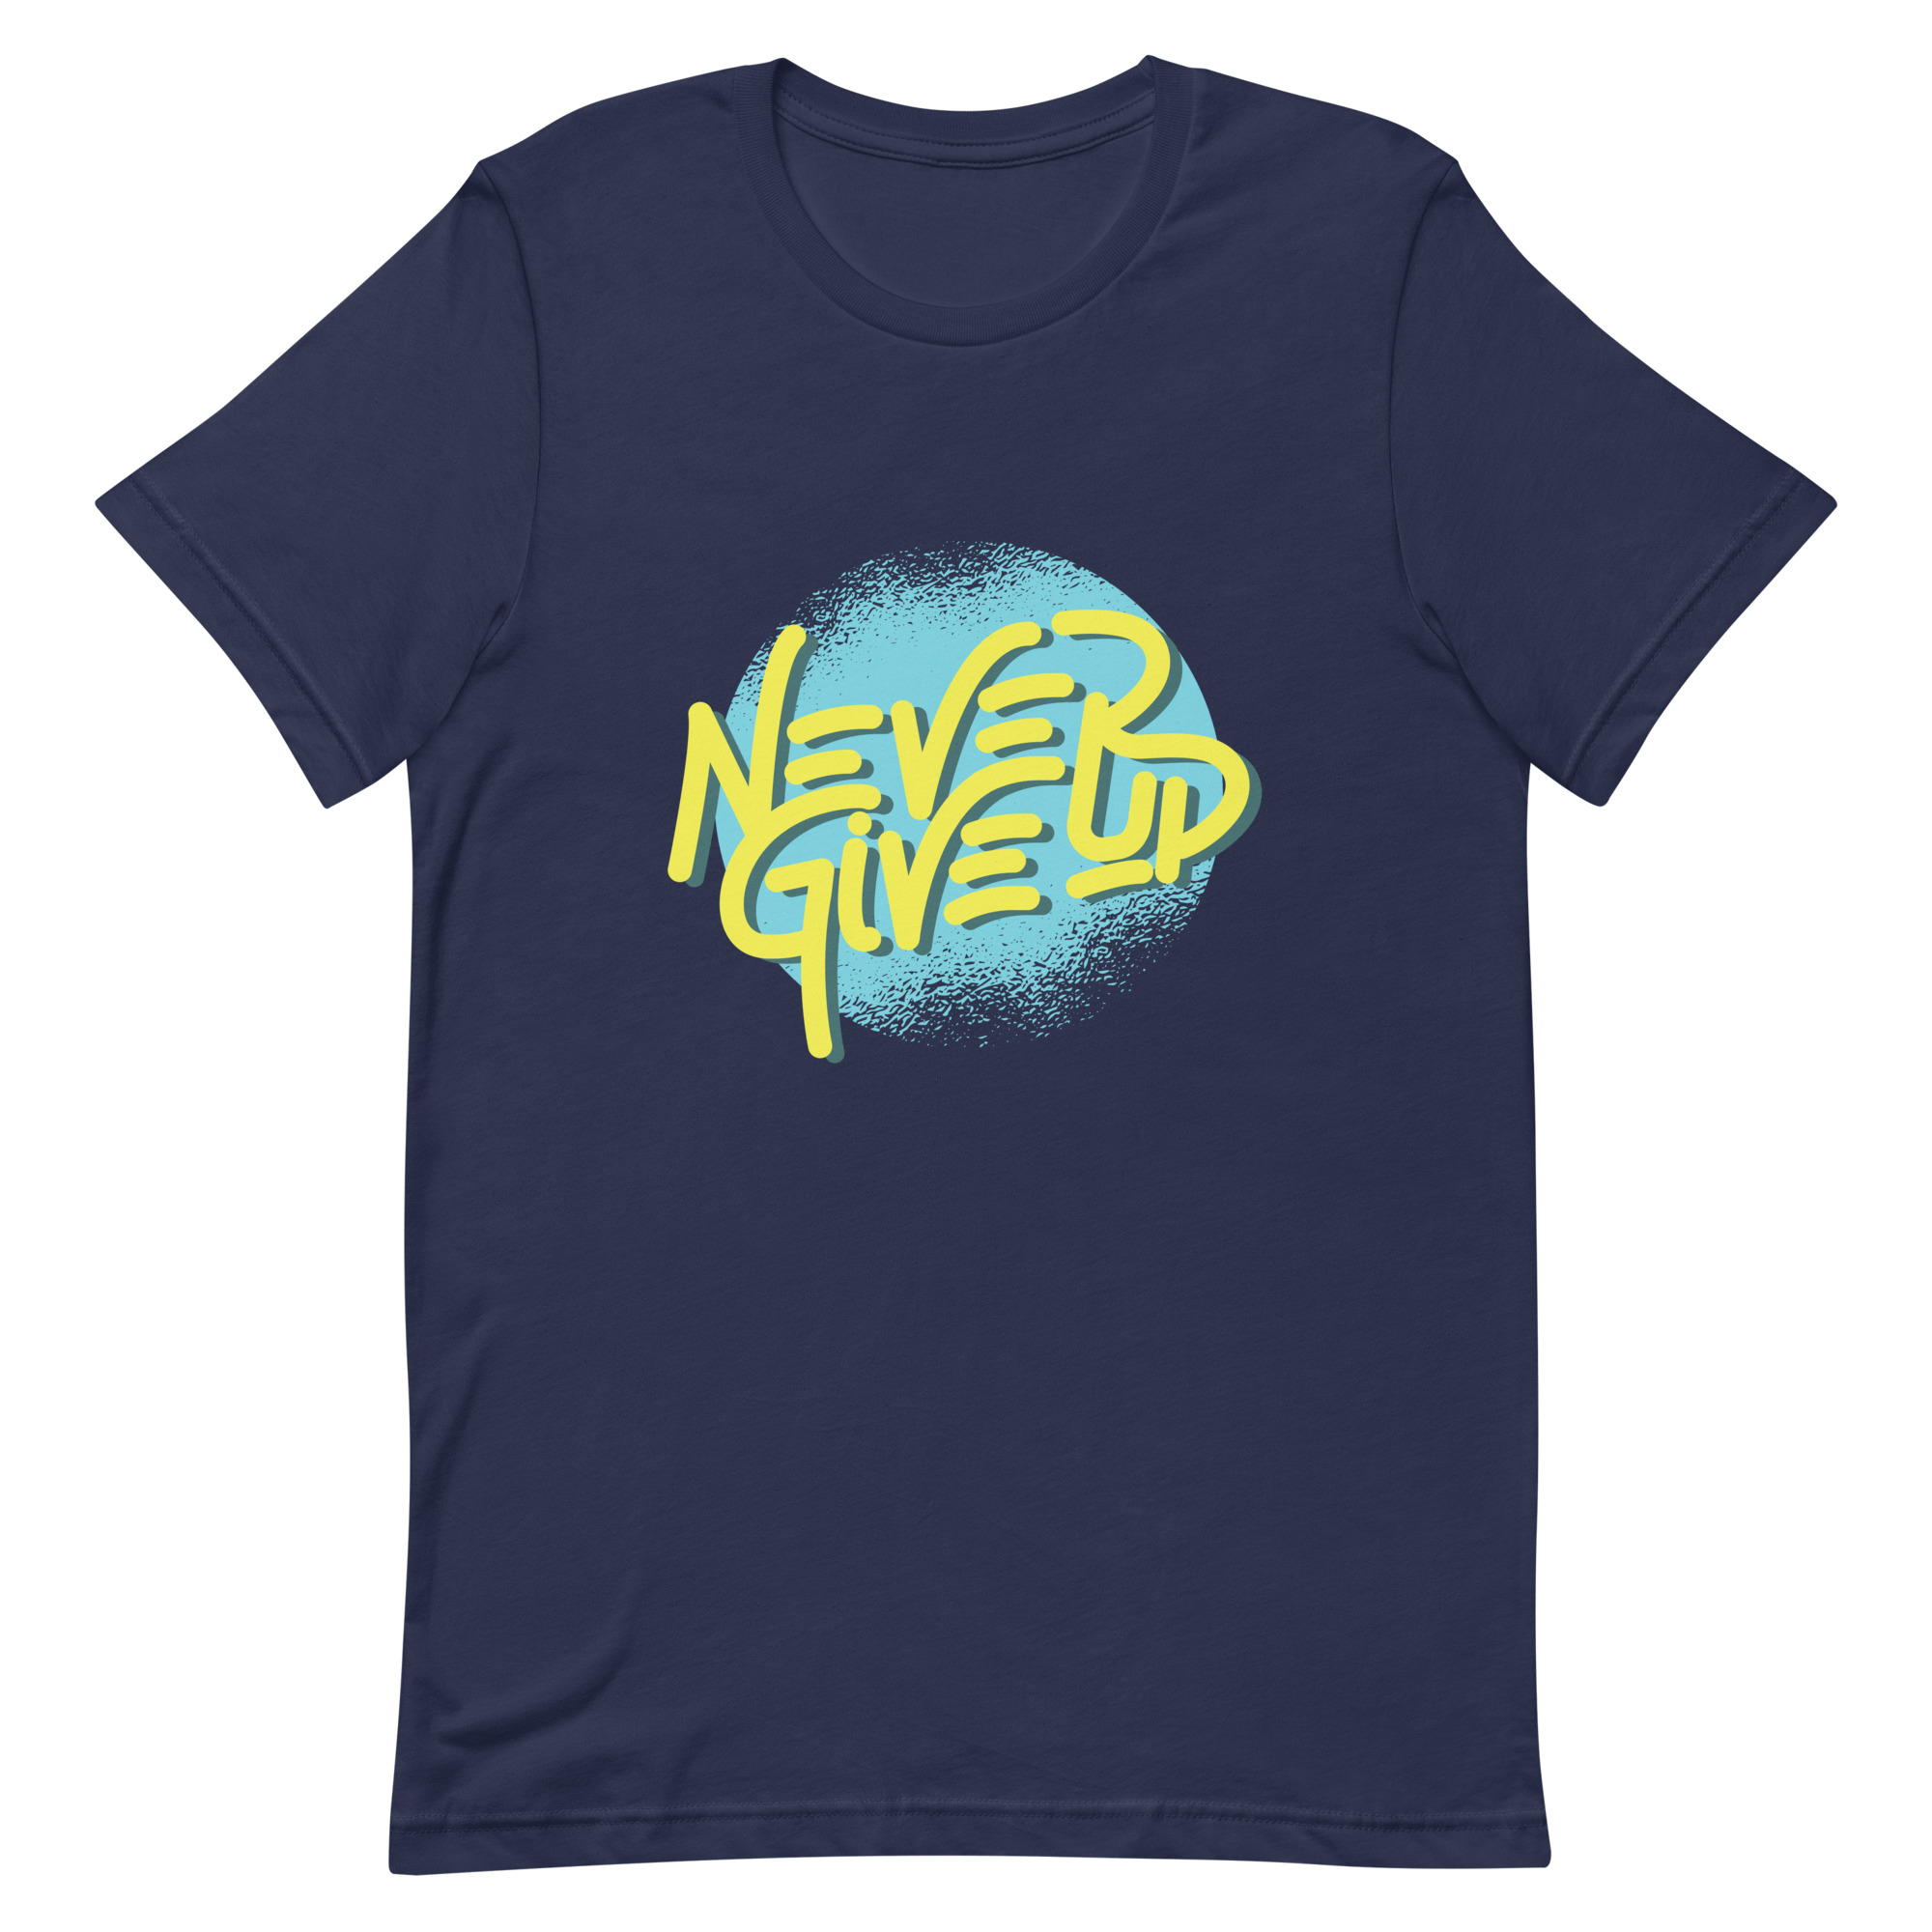 Never Give Up T-Shirt - Sayings Shirts